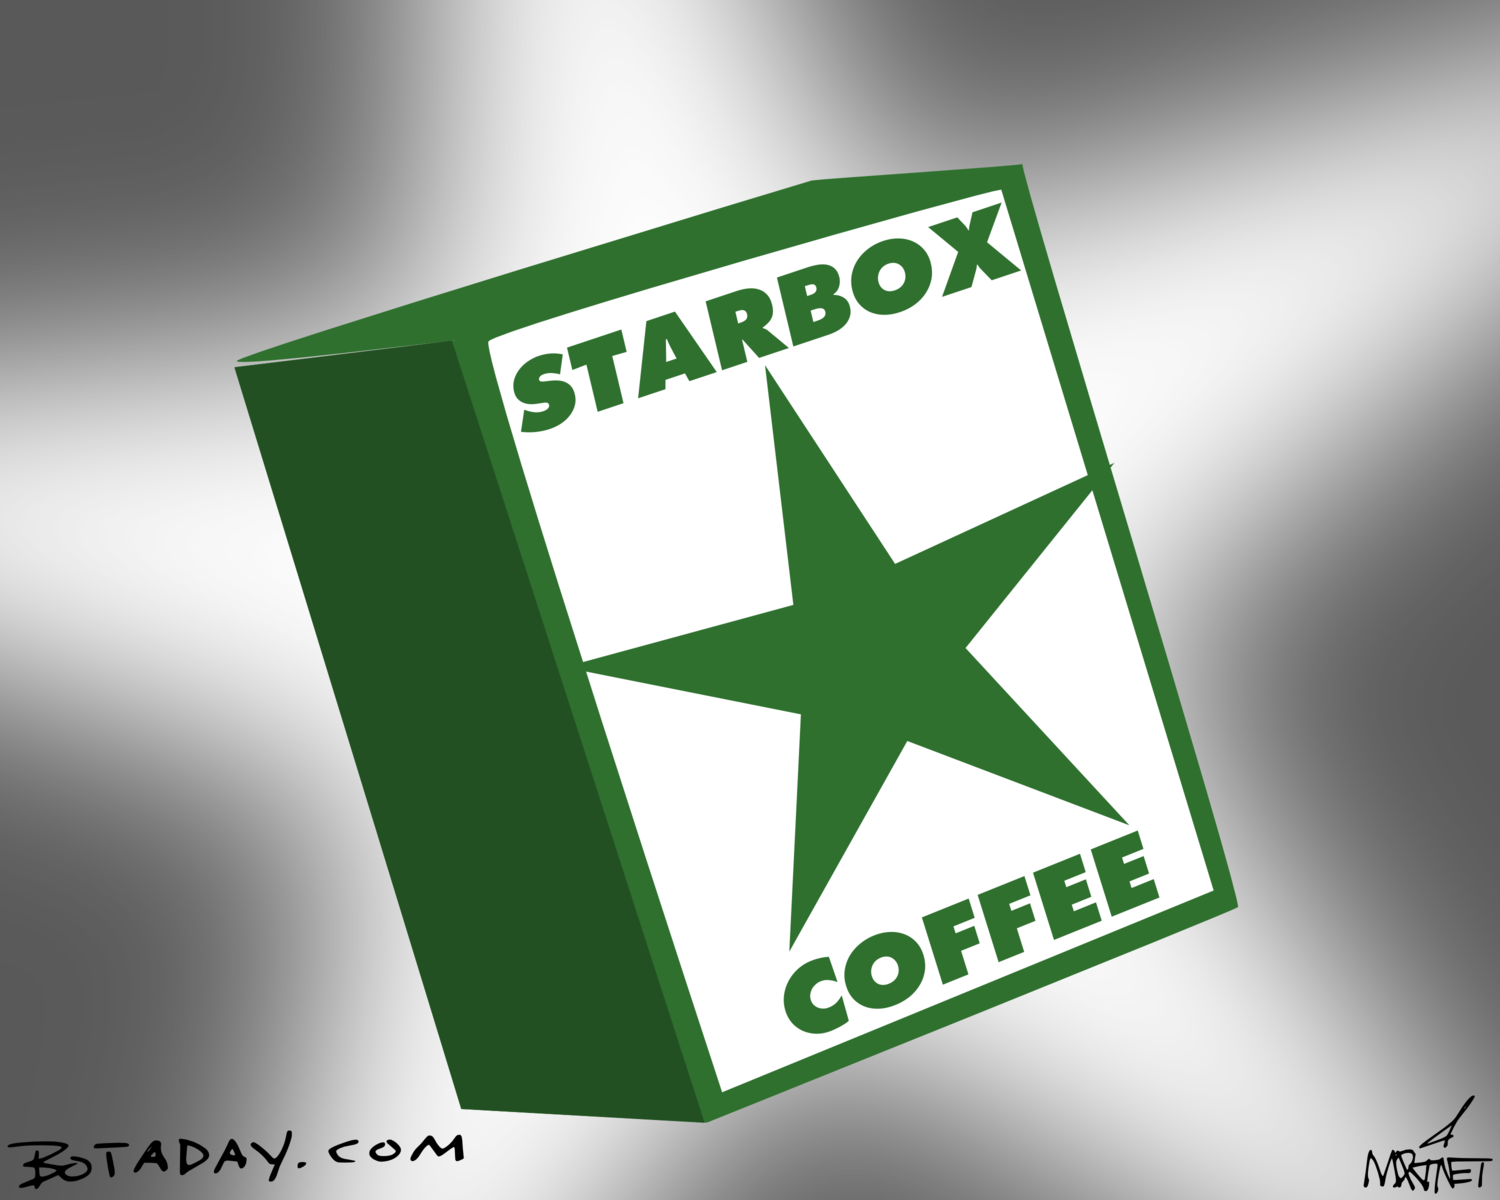 Starbox Coffee Botaday